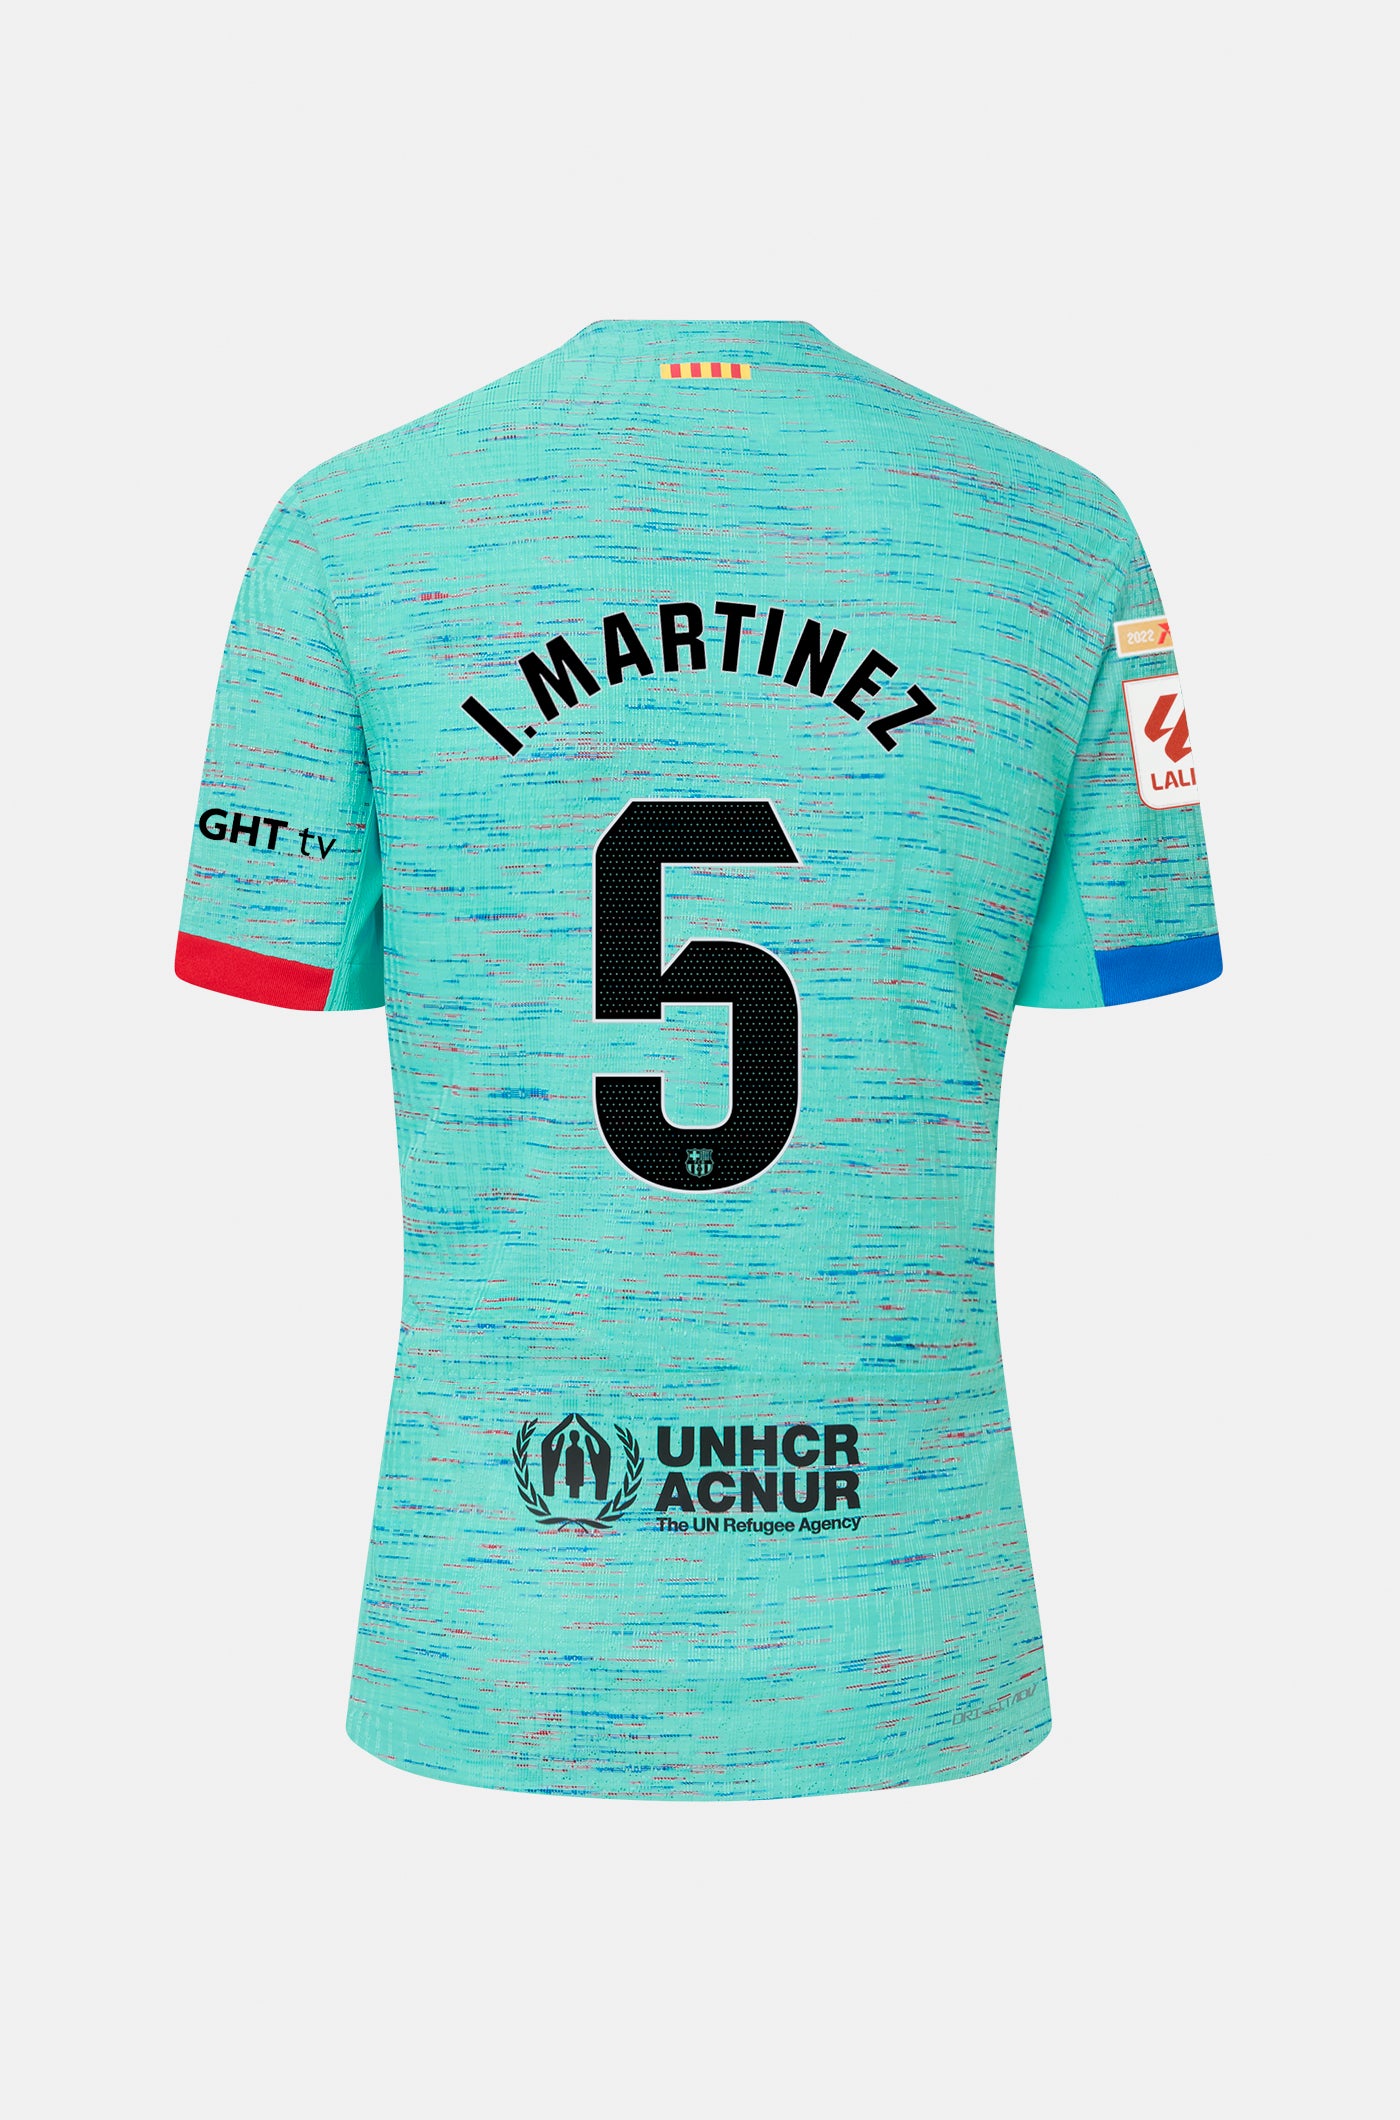 LFP FC Barcelona third shirt 23/24 Player’s Edition  - I. MARTÍNEZ